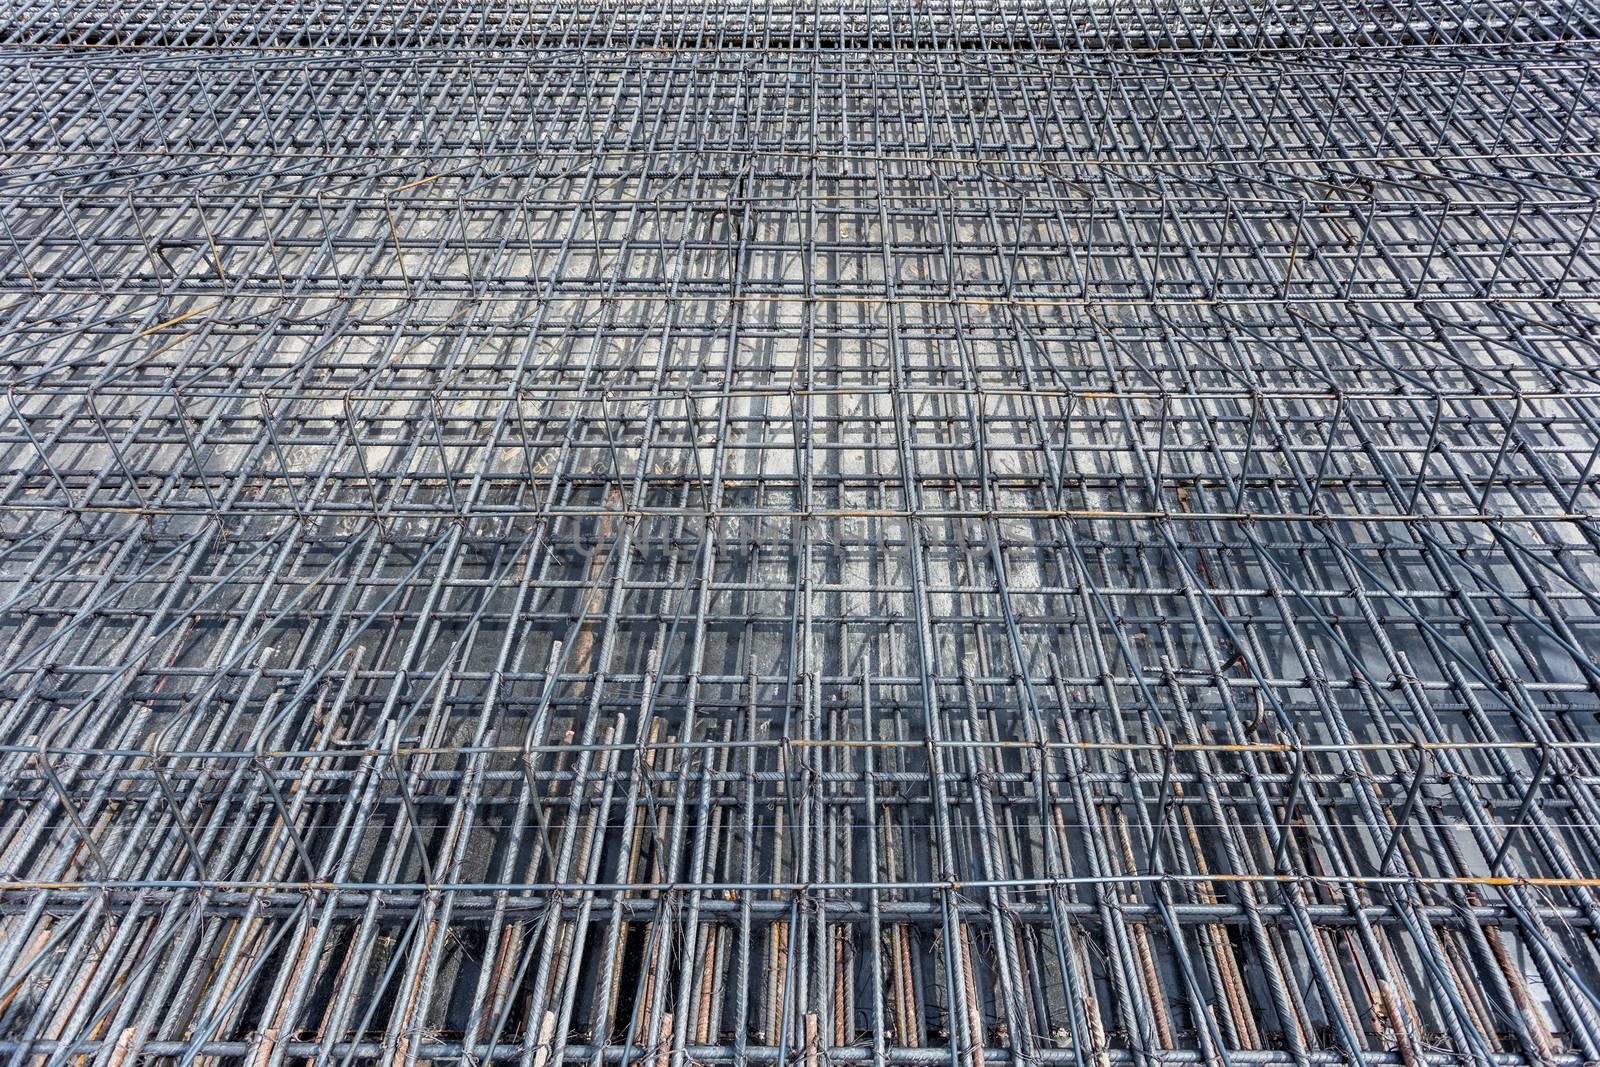 steel reinforcements at building construction site by antpkr